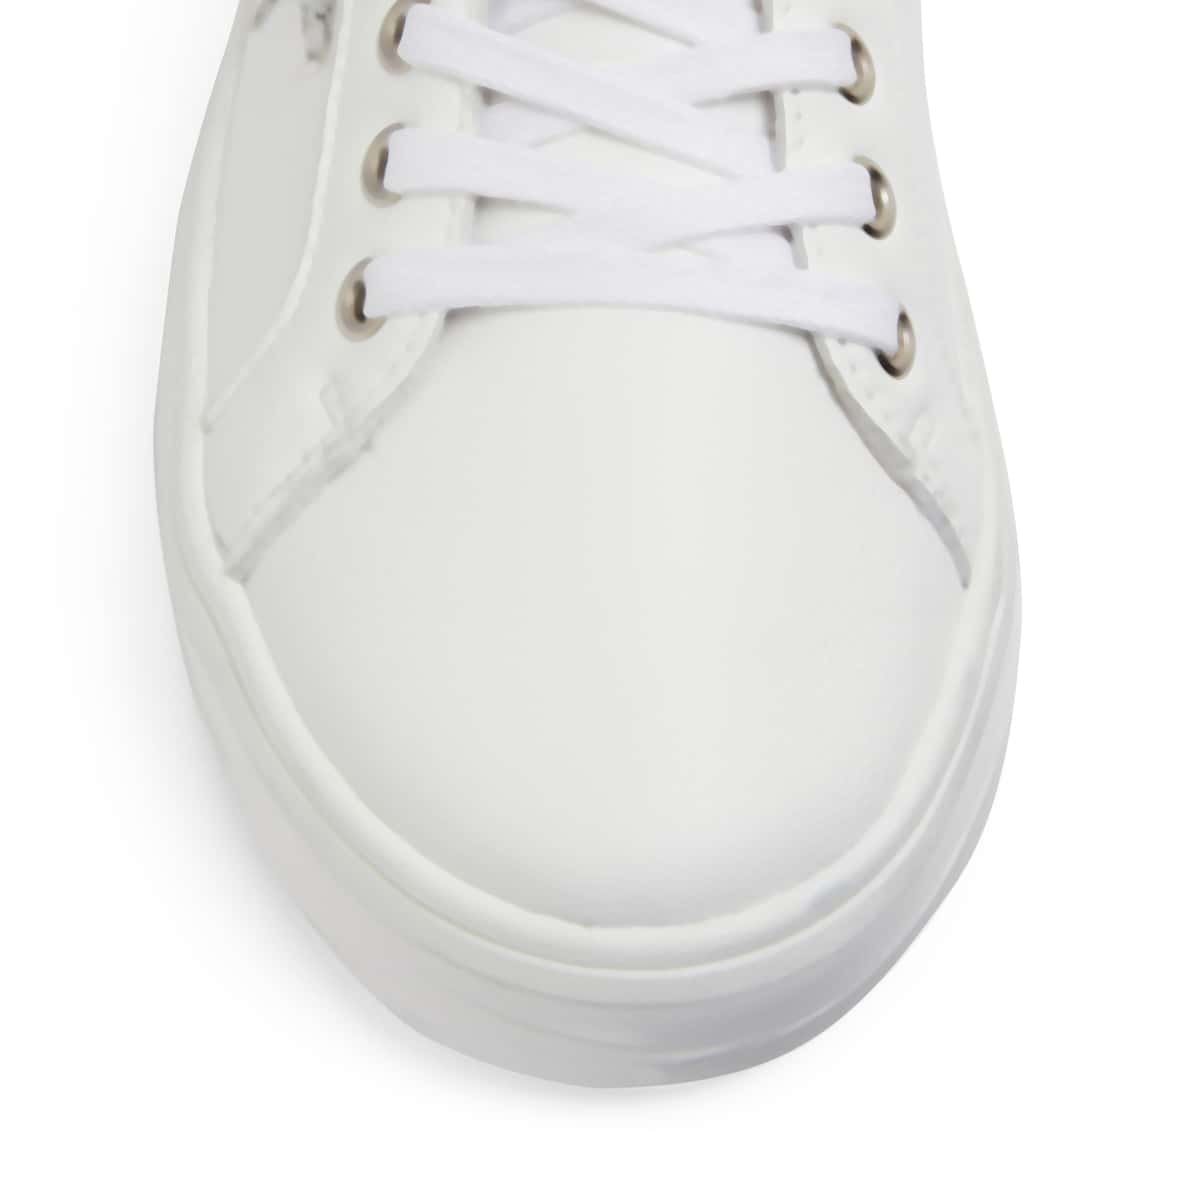 Ultra Sneaker in White Glitter Leather